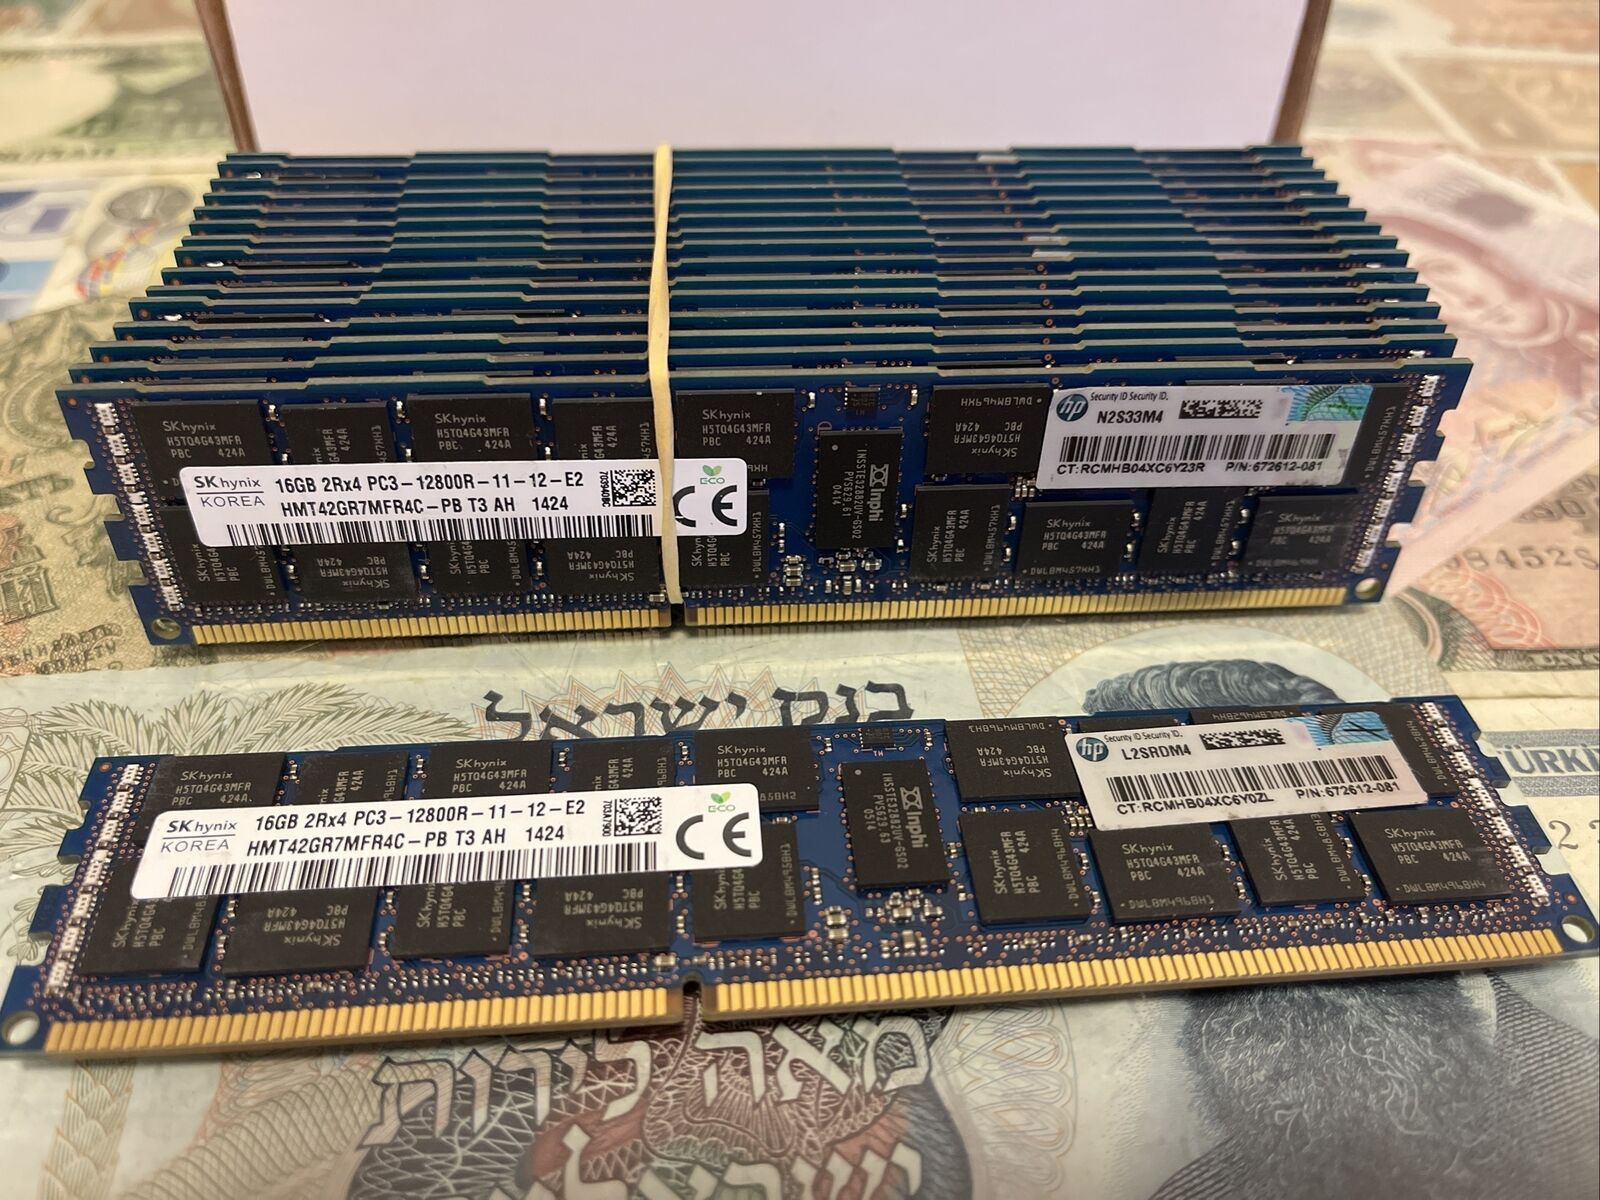 Lot of 16 SK Hynix 16GB 2Rx4 PC3-12800R-11-12-E2 Server RAM HMT42GR7MFRAC-PB